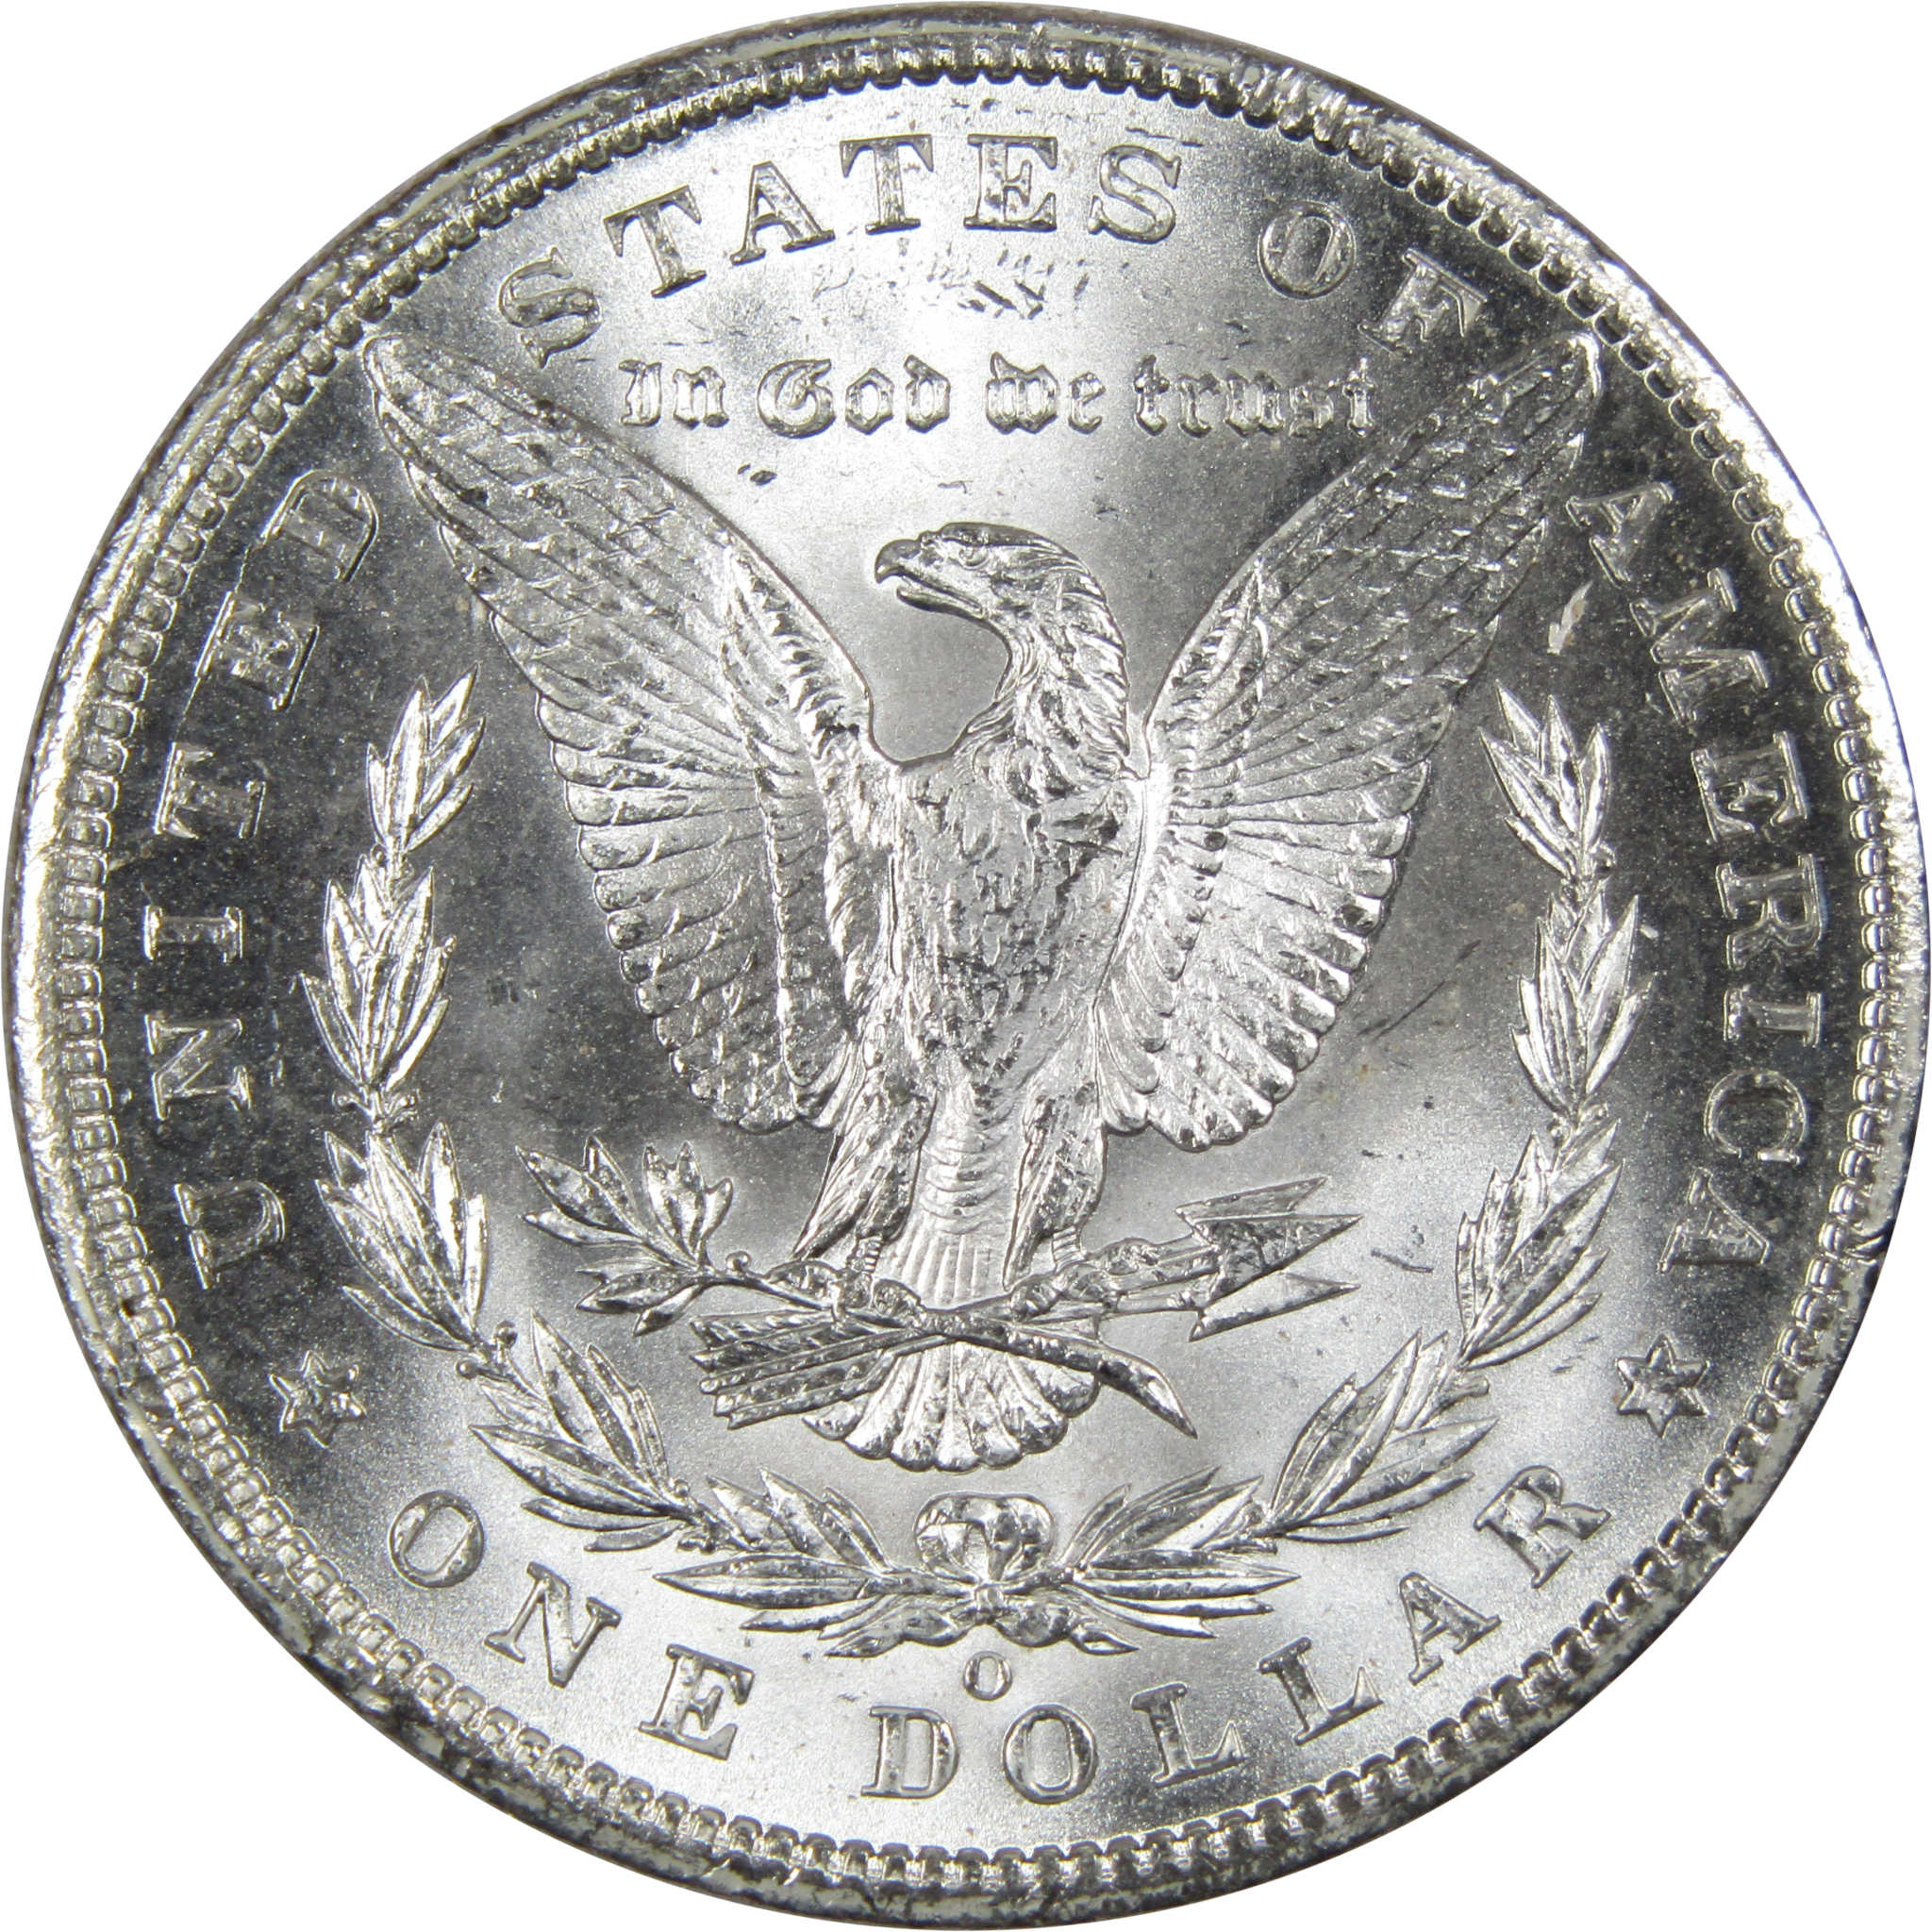 1900 O Morgan Dollar BU Uncirculated Mint State 90% Silver SKU:IPC9787 - Morgan coin - Morgan silver dollar - Morgan silver dollar for sale - Profile Coins &amp; Collectibles